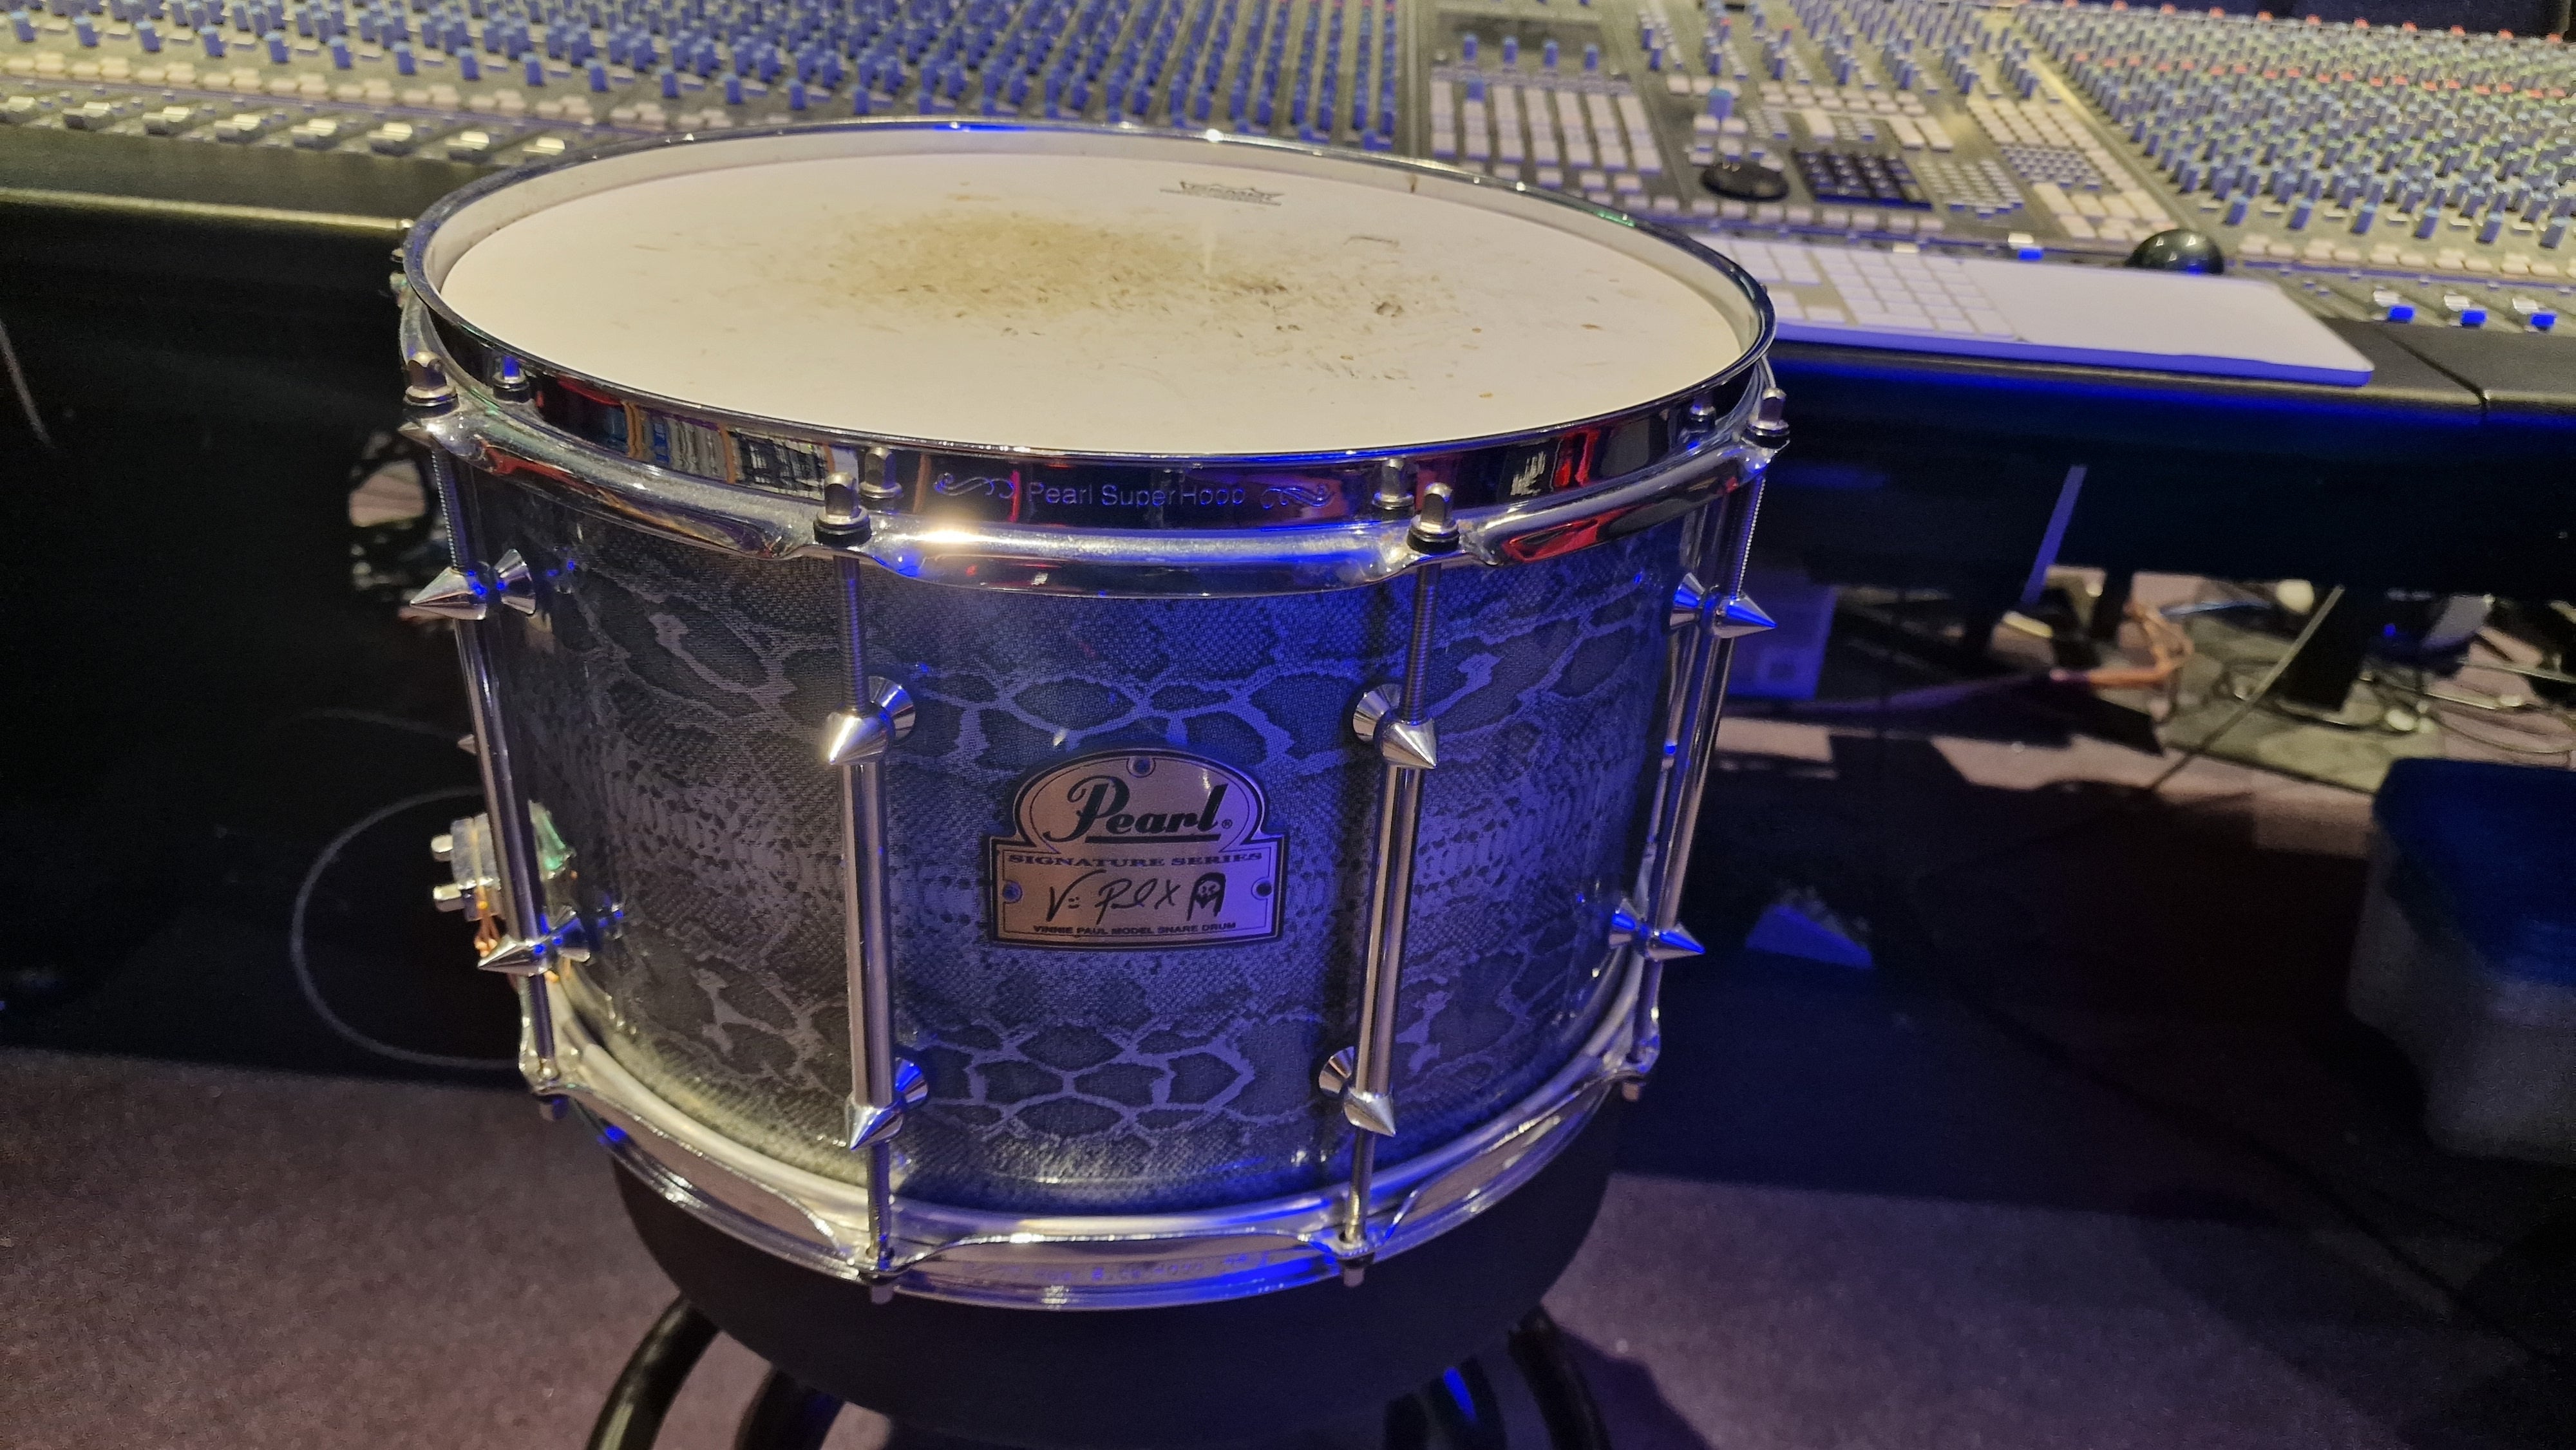 Pearl Vinnie Paul Signature Snare Drum 14x8 VP1480 Pantera Prototype Artist Owned by Vinnie